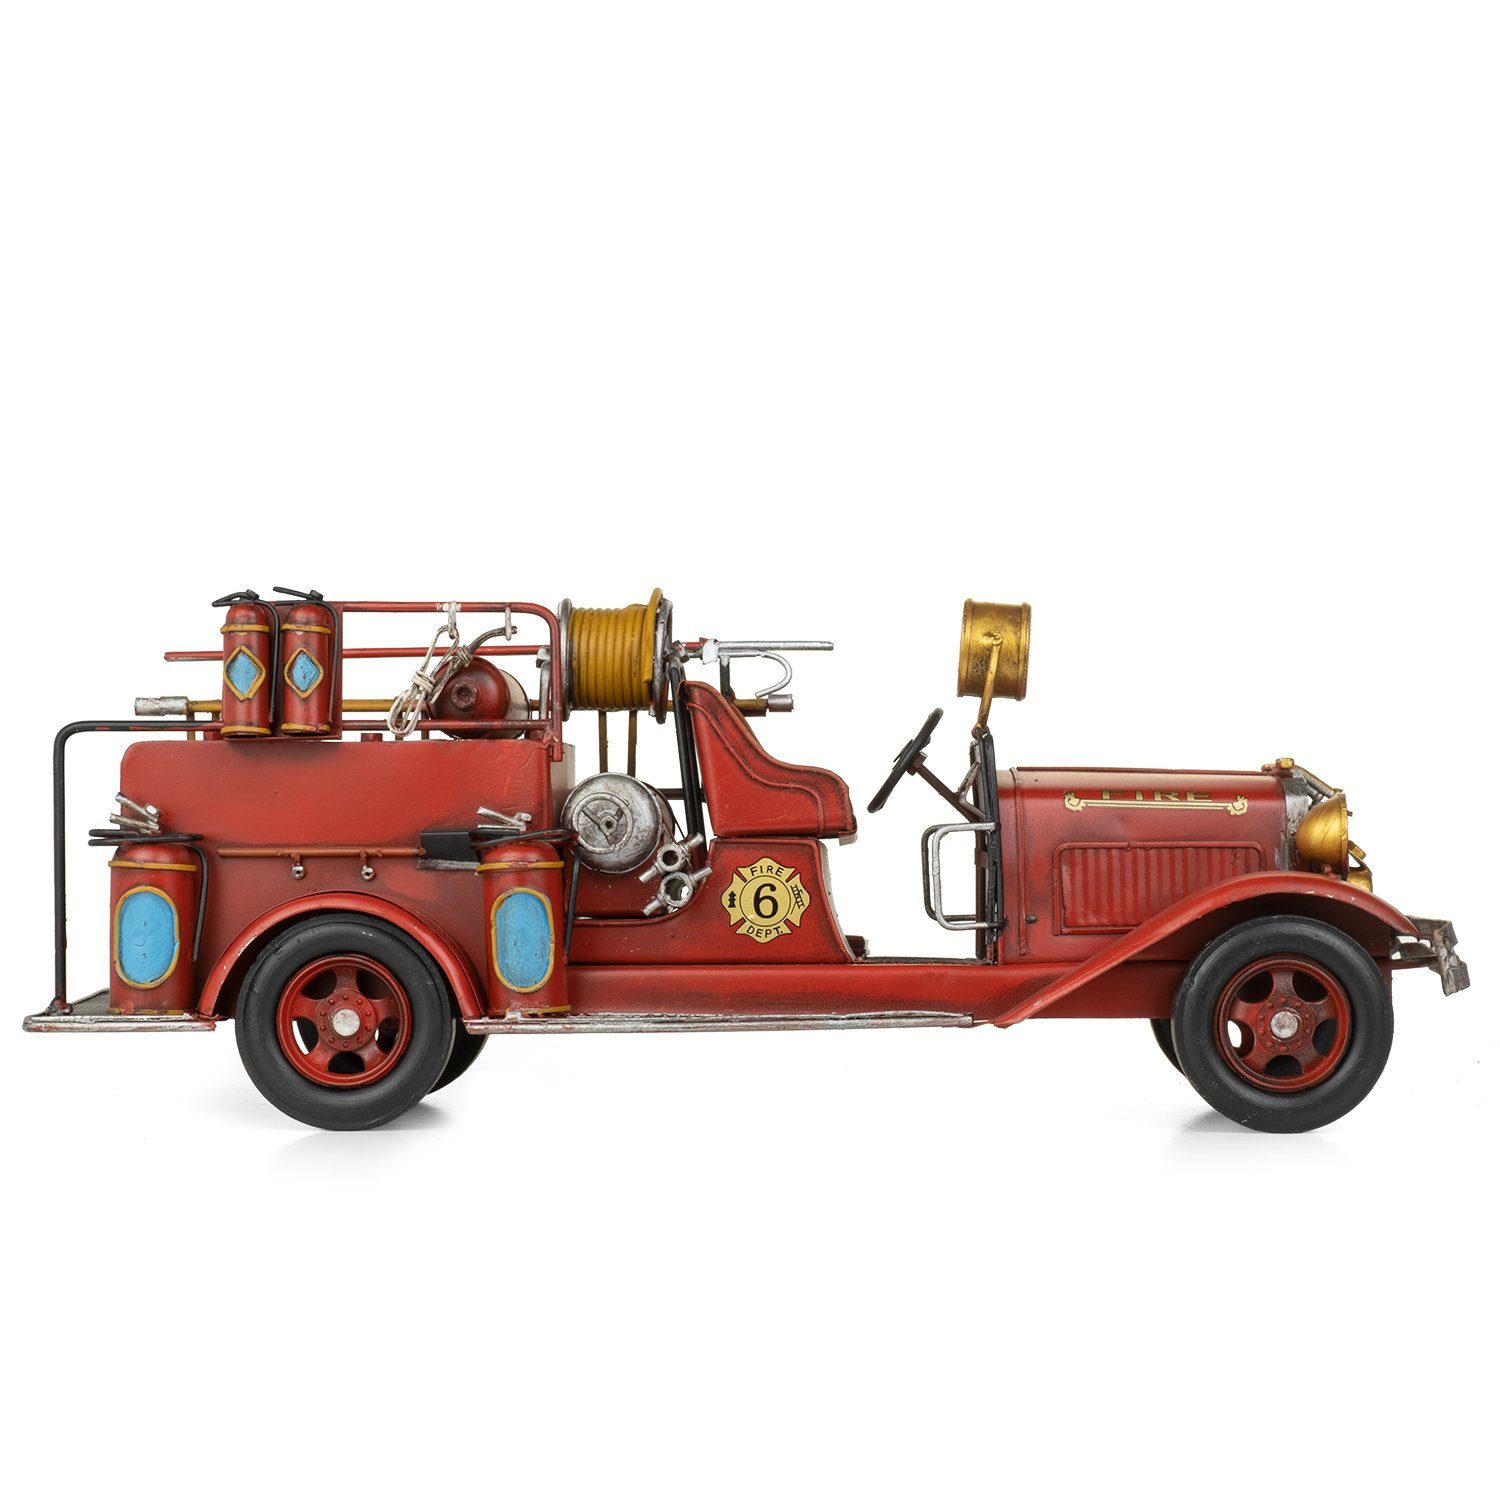 Feuerwehrwagen 6, Nr. Retro Blechmodell Nostalgie Nachbildung Modell Dekoobjekt Blech-Deko Antik-Stil Oldtimer Miniatur Moritz Auto